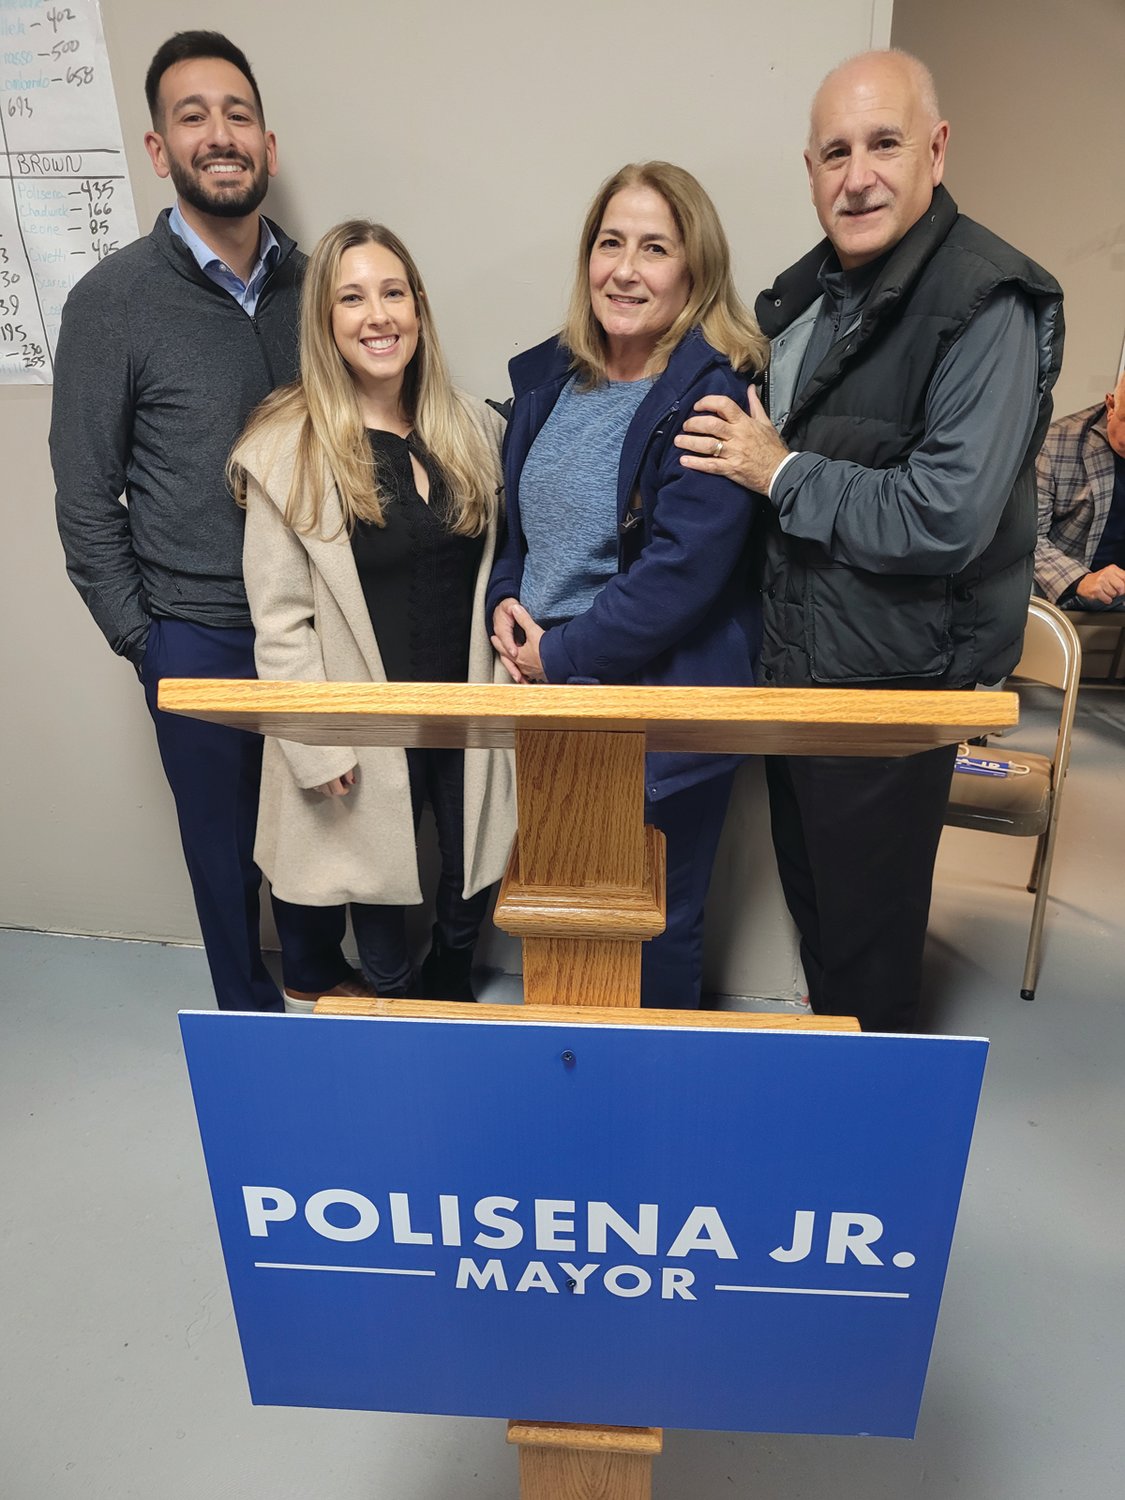 FAMILY AFFAIR: The Polisena family poses for a photo following Johnston Mayor-elect Joe Polisena Jr.’s General Election night victory.